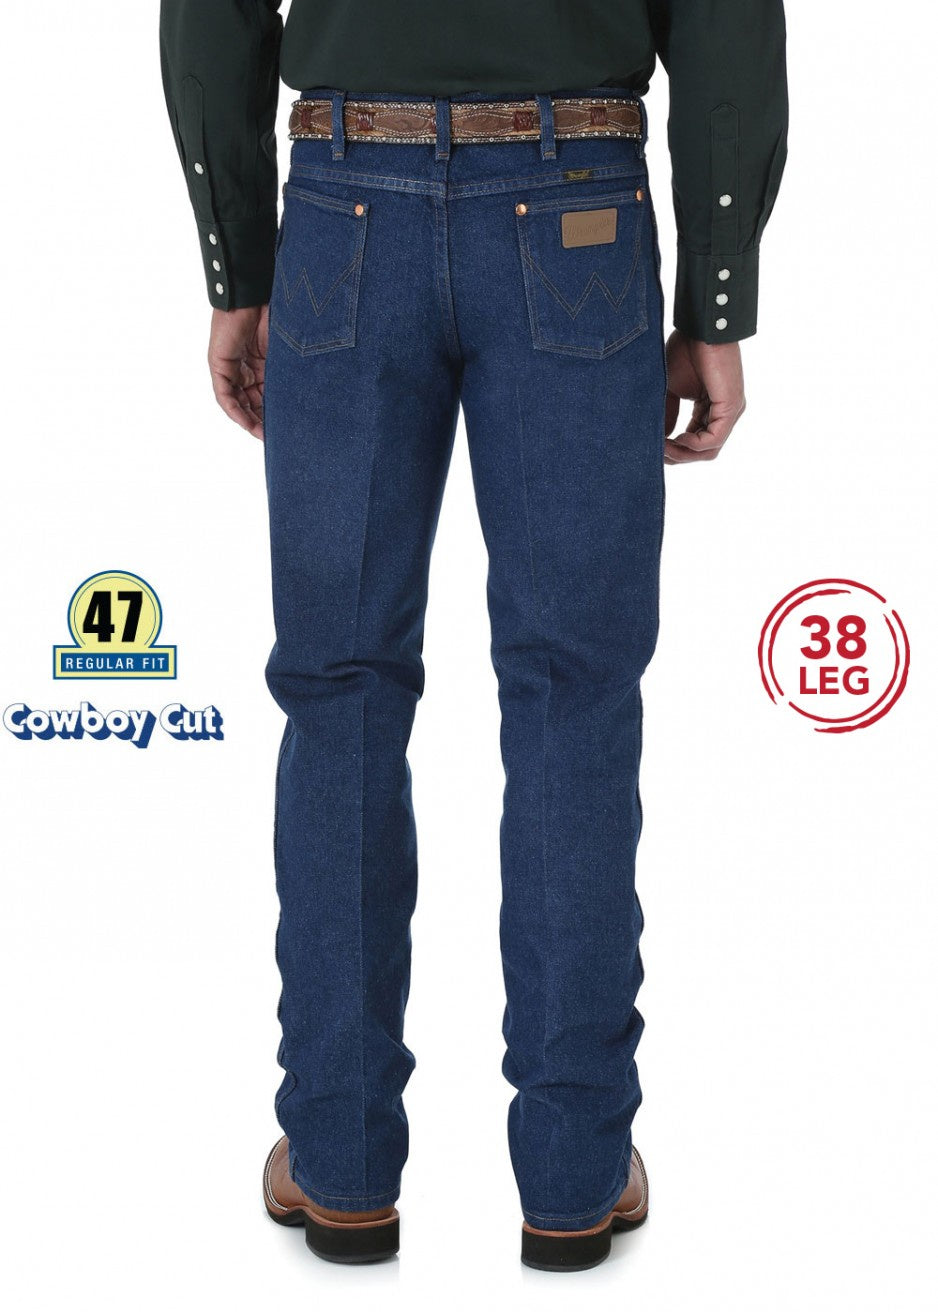 Mens Wrangler Cowboy Cut Slim fit 38 Leg Jean (3759653617741)